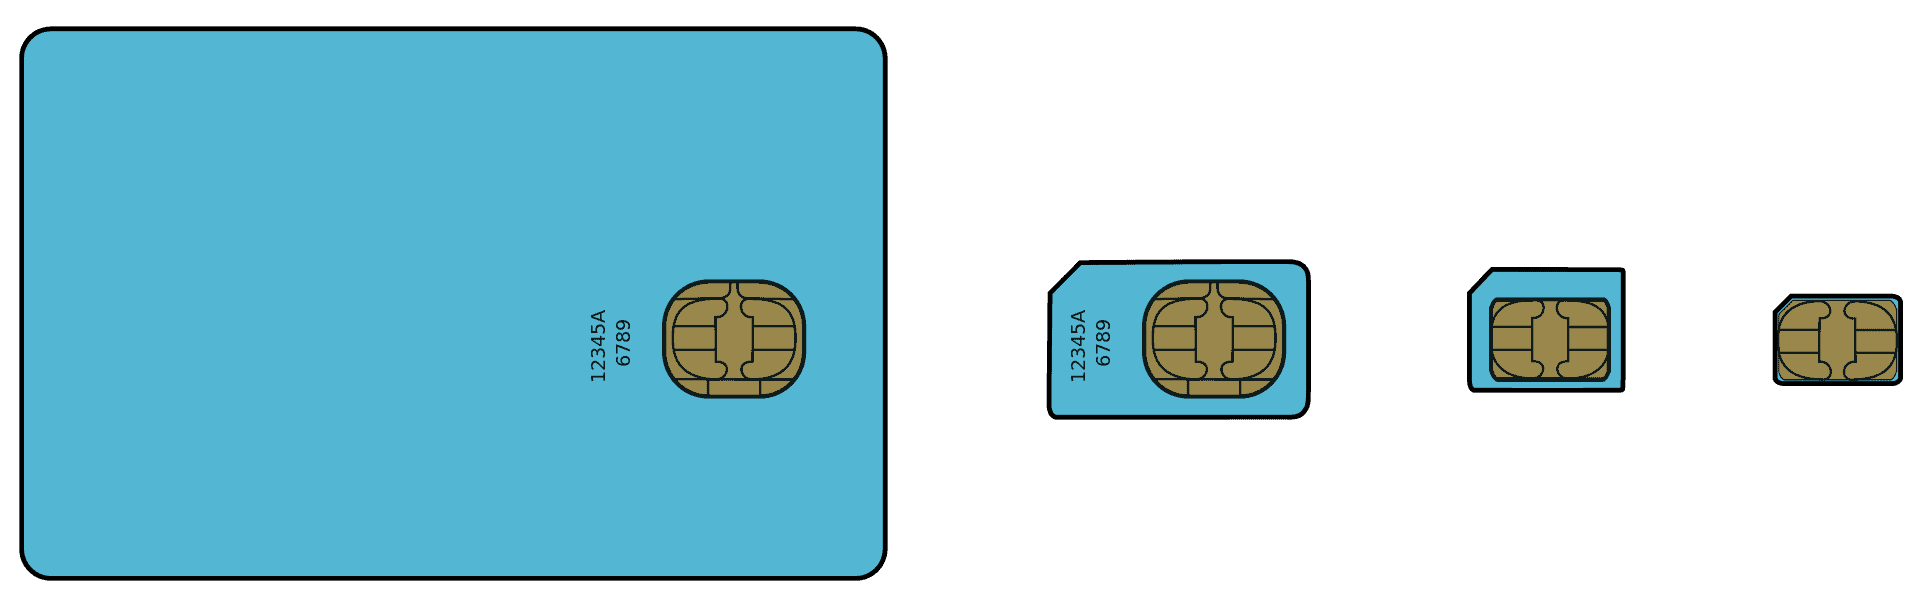 GSM-SIM-Karten-Evolution-Svg